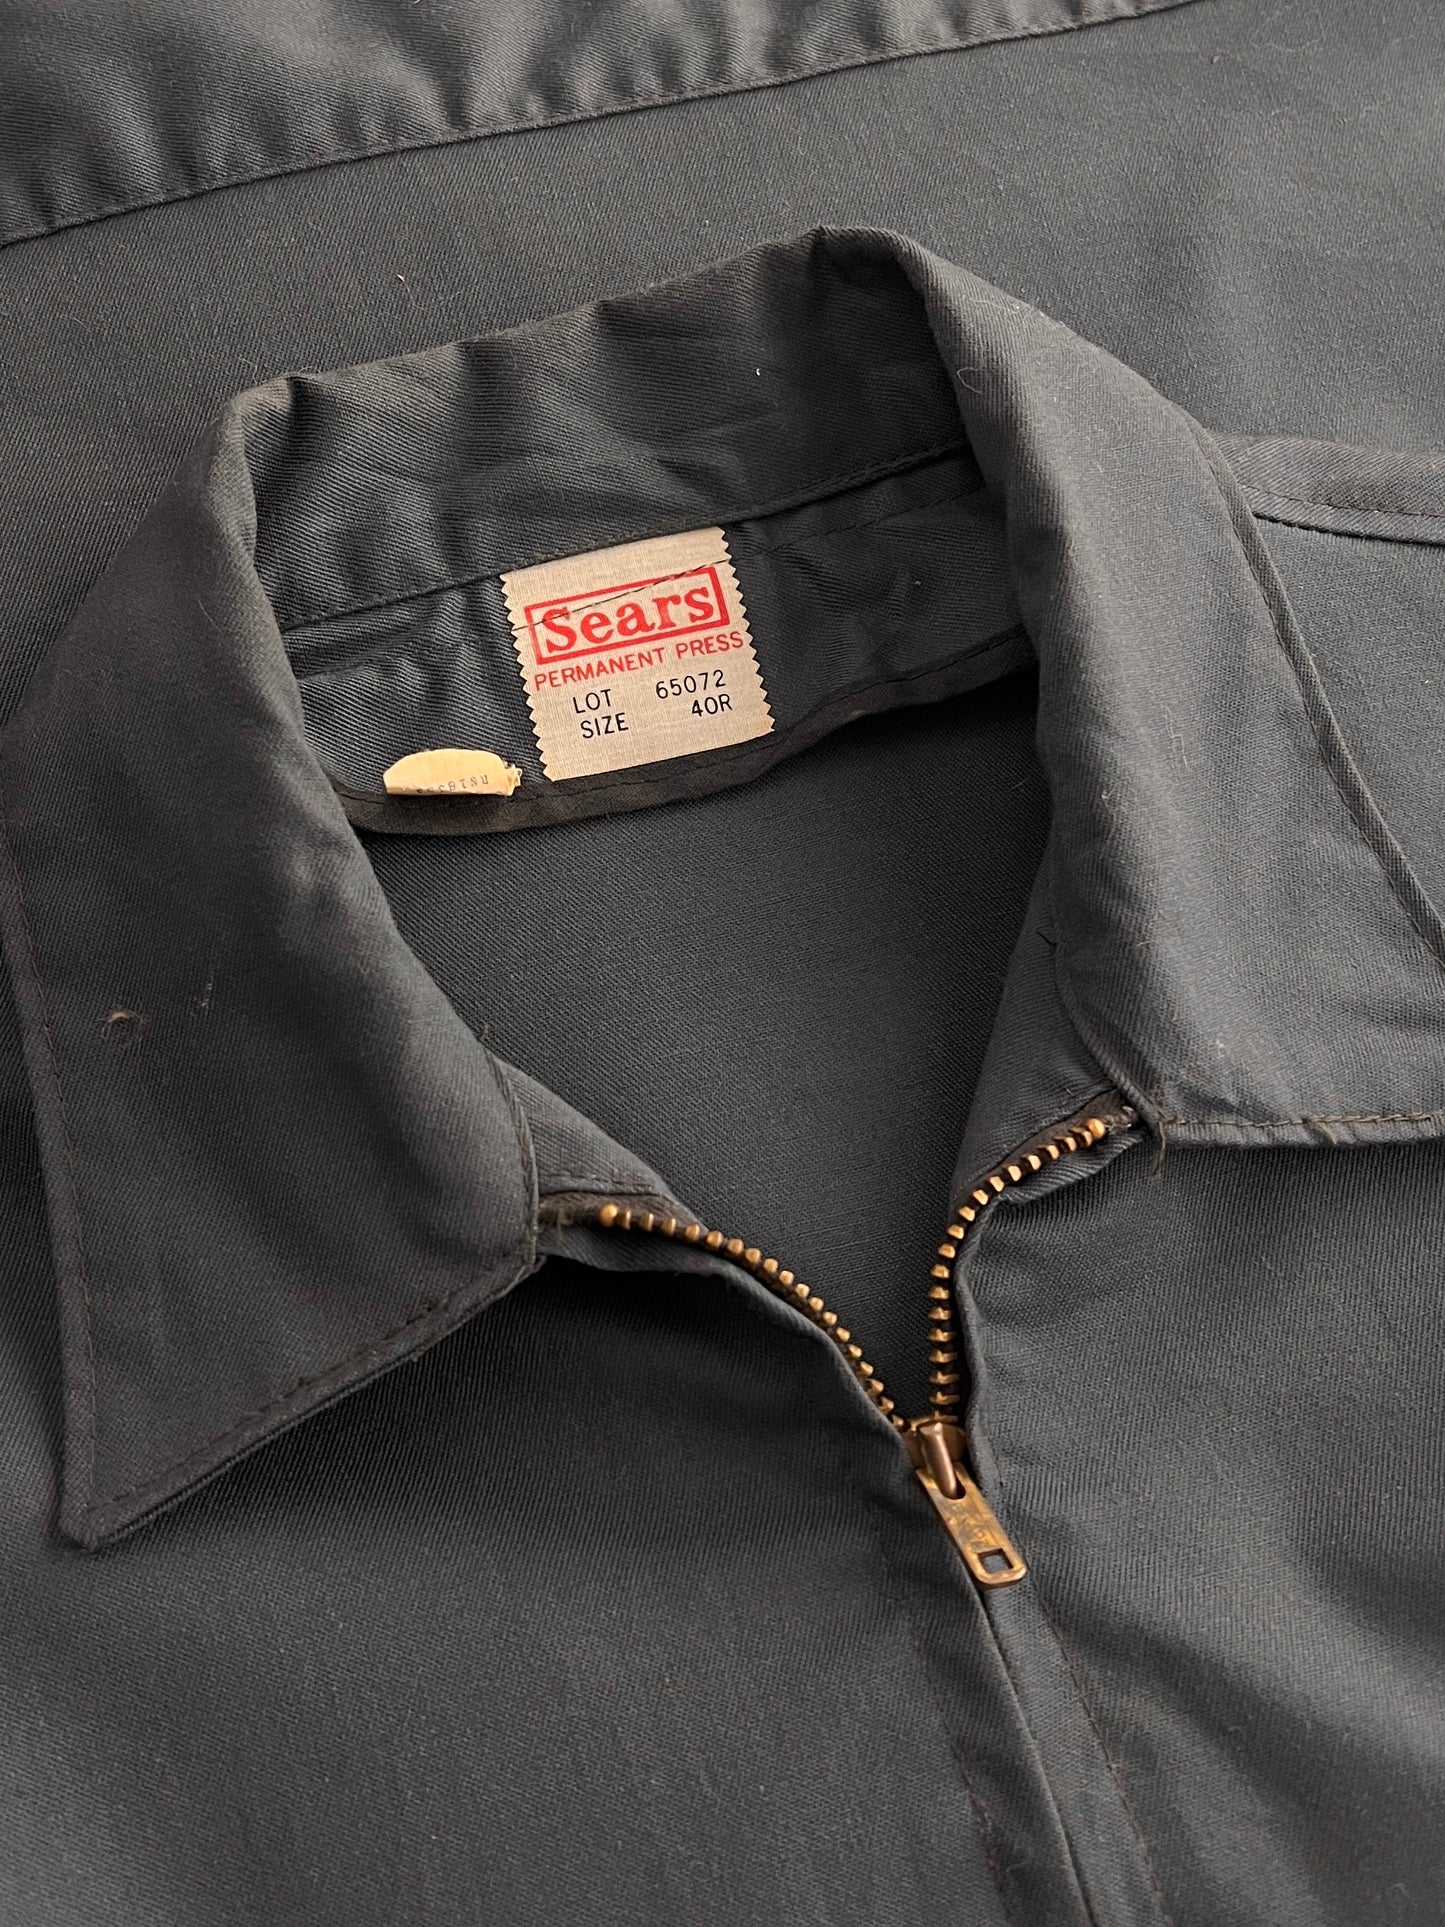 60's Sears Work Jacket [M/L]